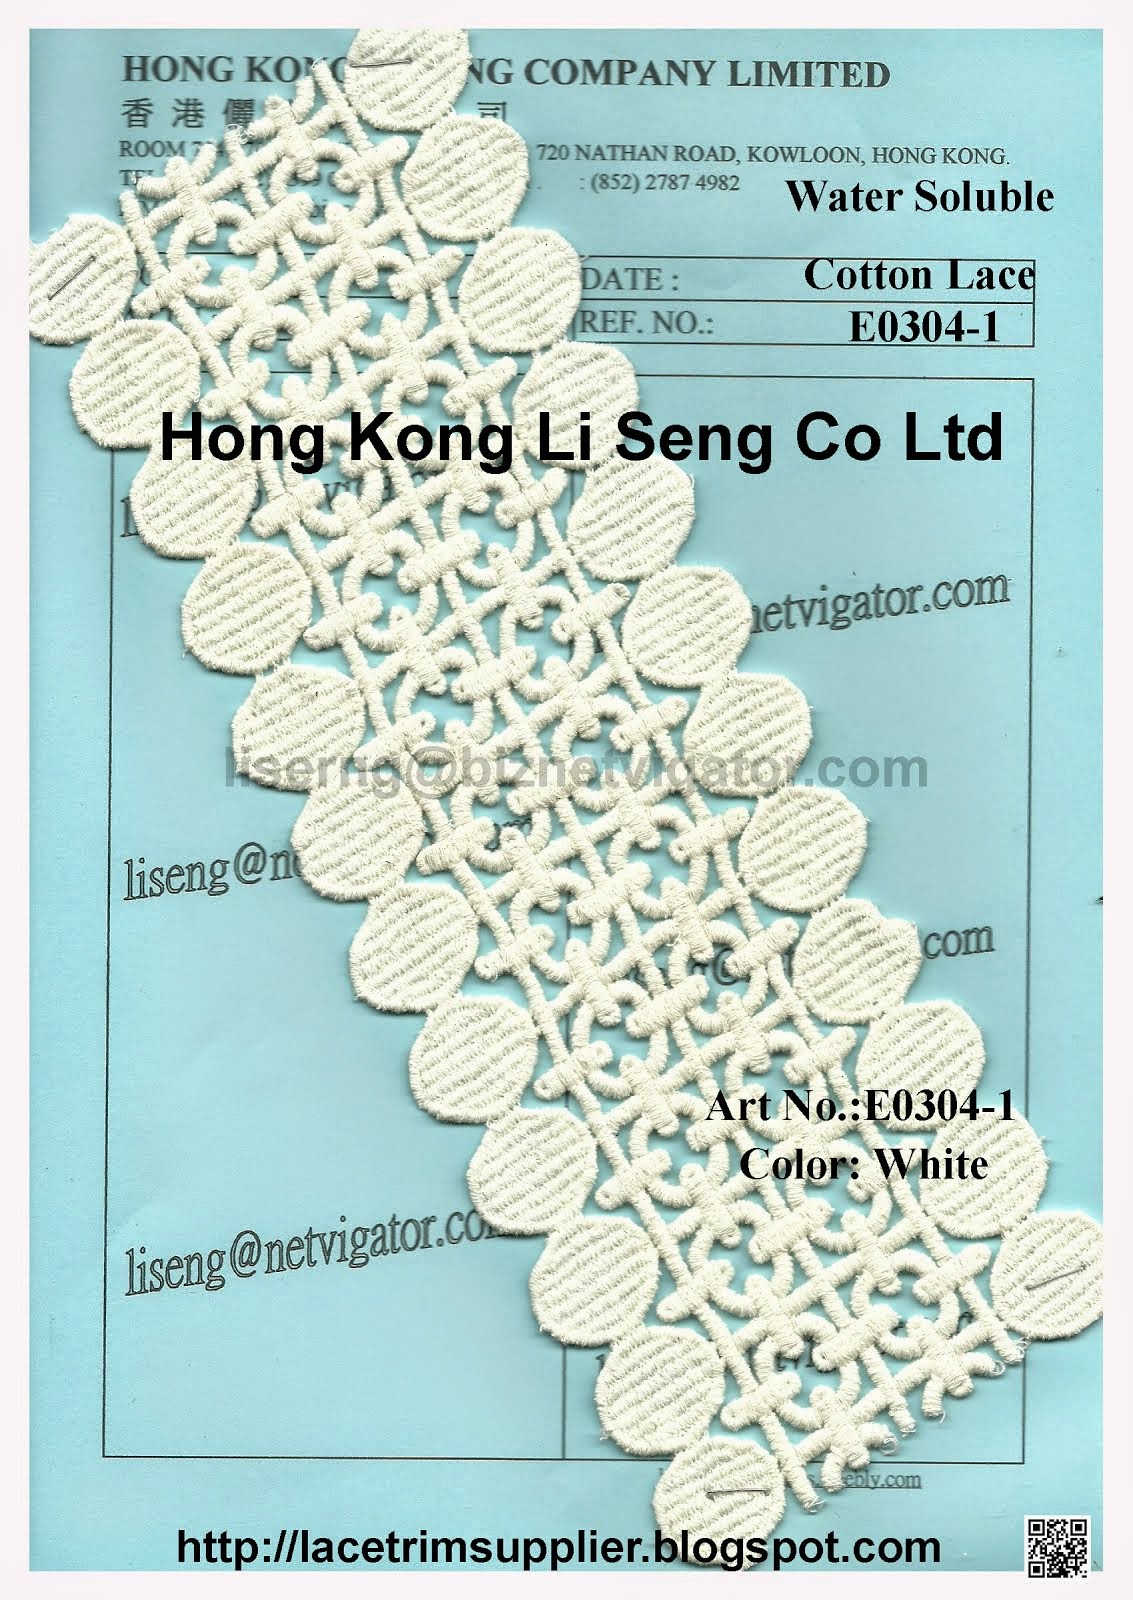 Water Soluble Embroidery Cotton Lace Manufacturer - Hong Kong Li Seng Co Ltd